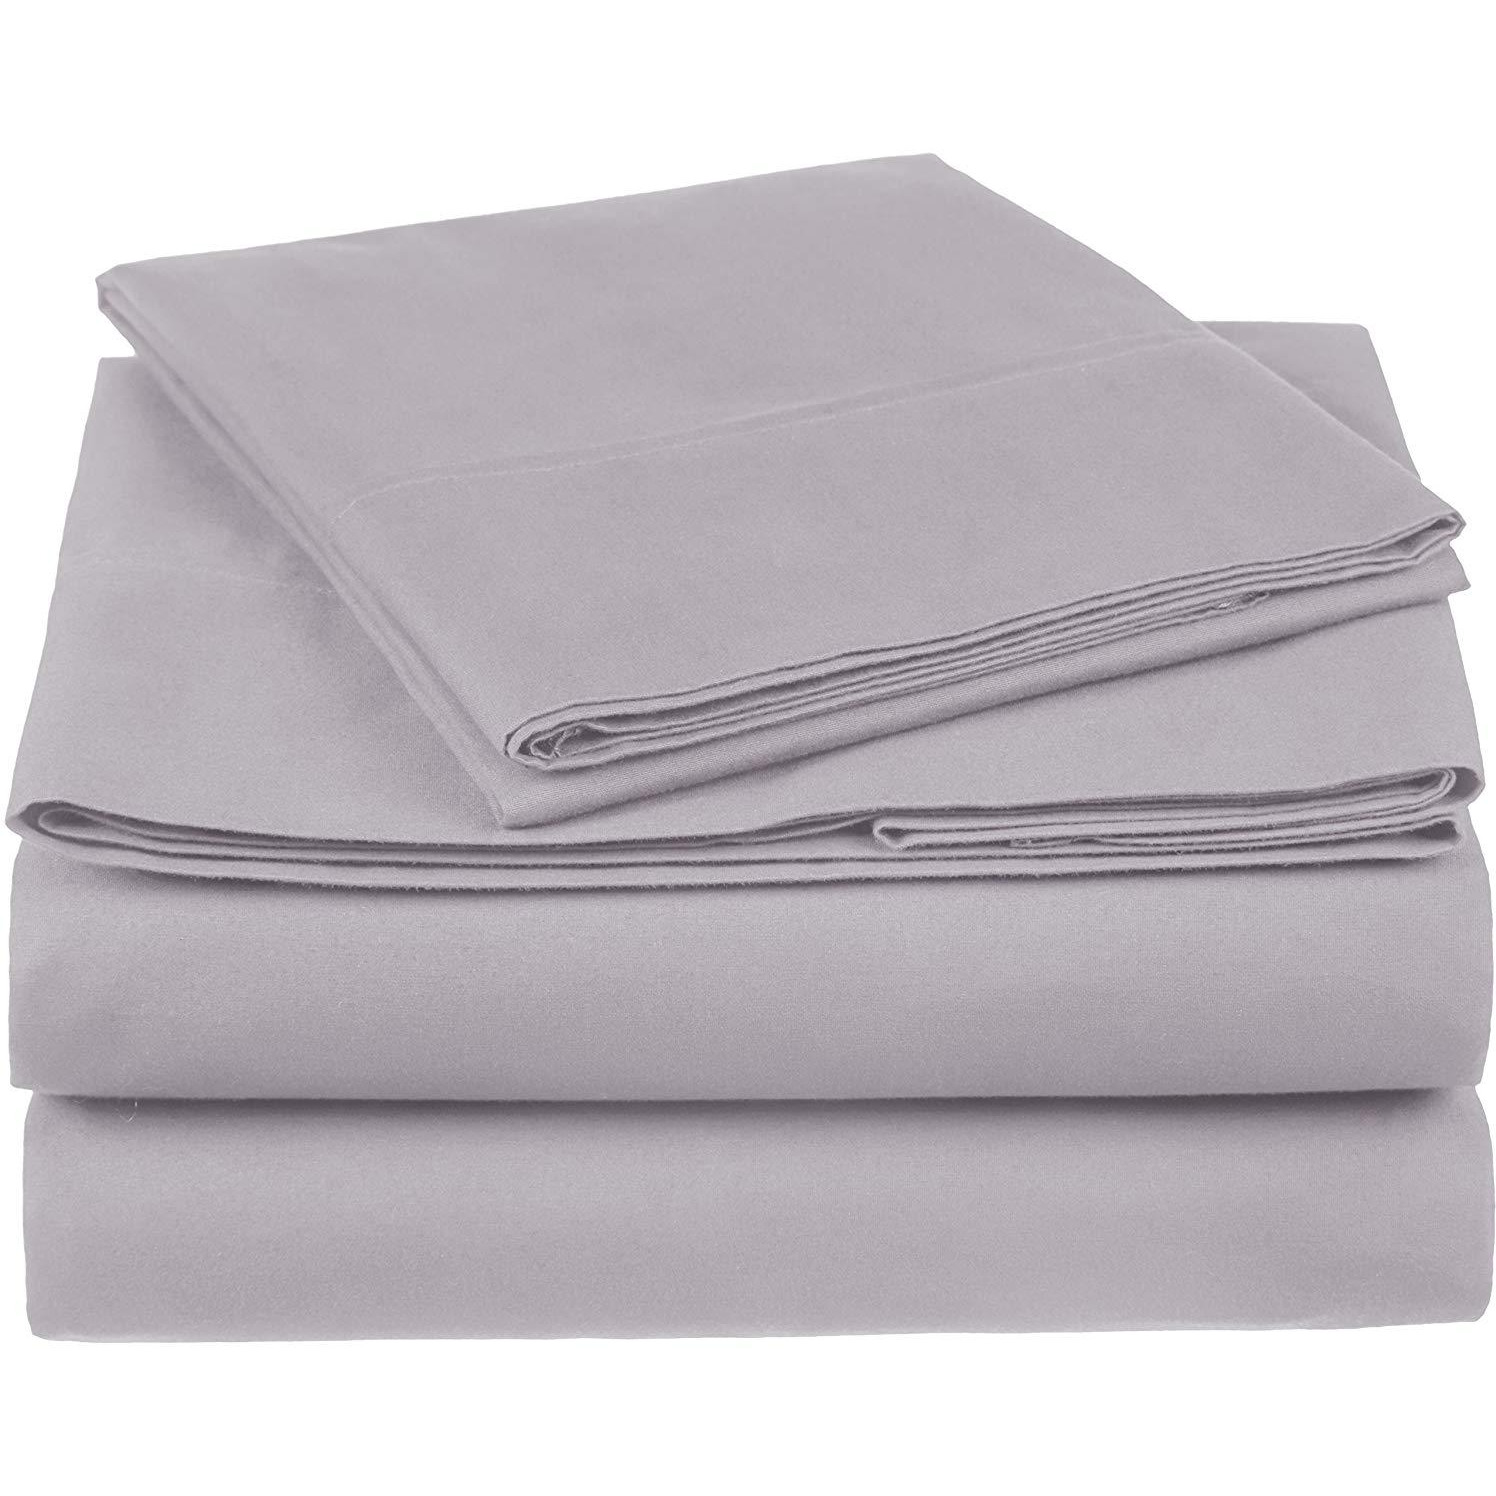 100% Cotton Sheet Set - 500 Thread Count (Piece:6 PIECE, Size:QUEEN, Color:GREY)